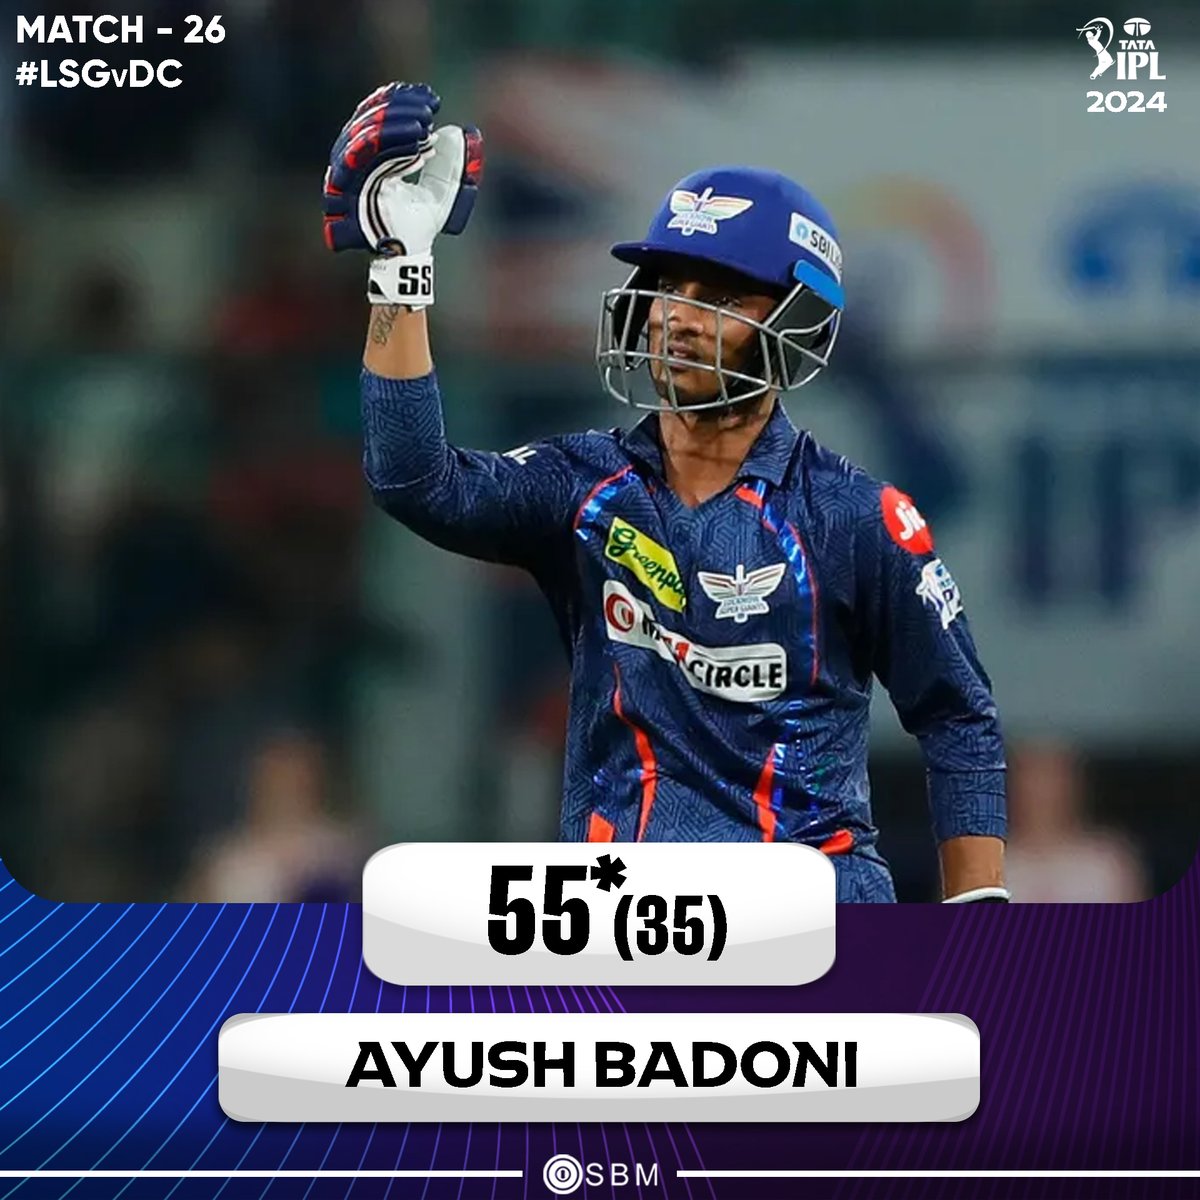 Ayush Badoni played an absolutely brilliant knock to take LSG to a good score👏 📷: IPL/BCCI #AyushBadoni #IPL #IPL2024 #LSGvDC #LSGvsDC #Cricket #SBM